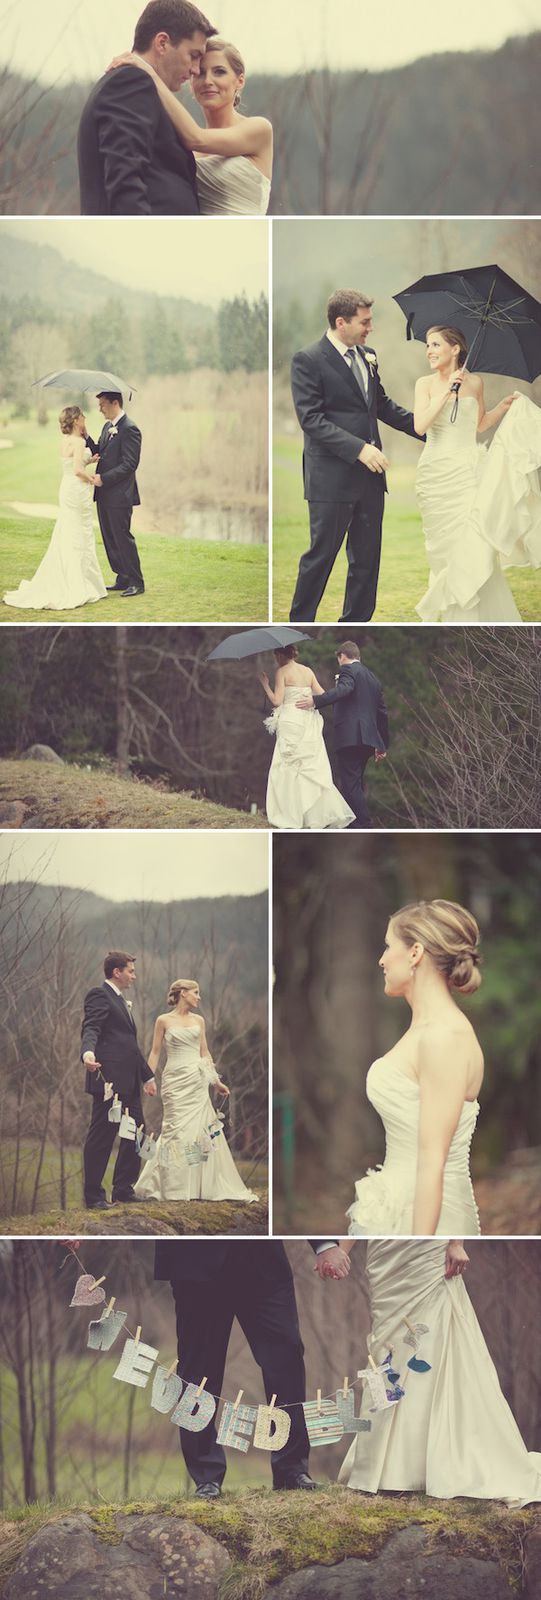 2.3-raining-on-wedding-day-gemmer-wedding-photographer-dani